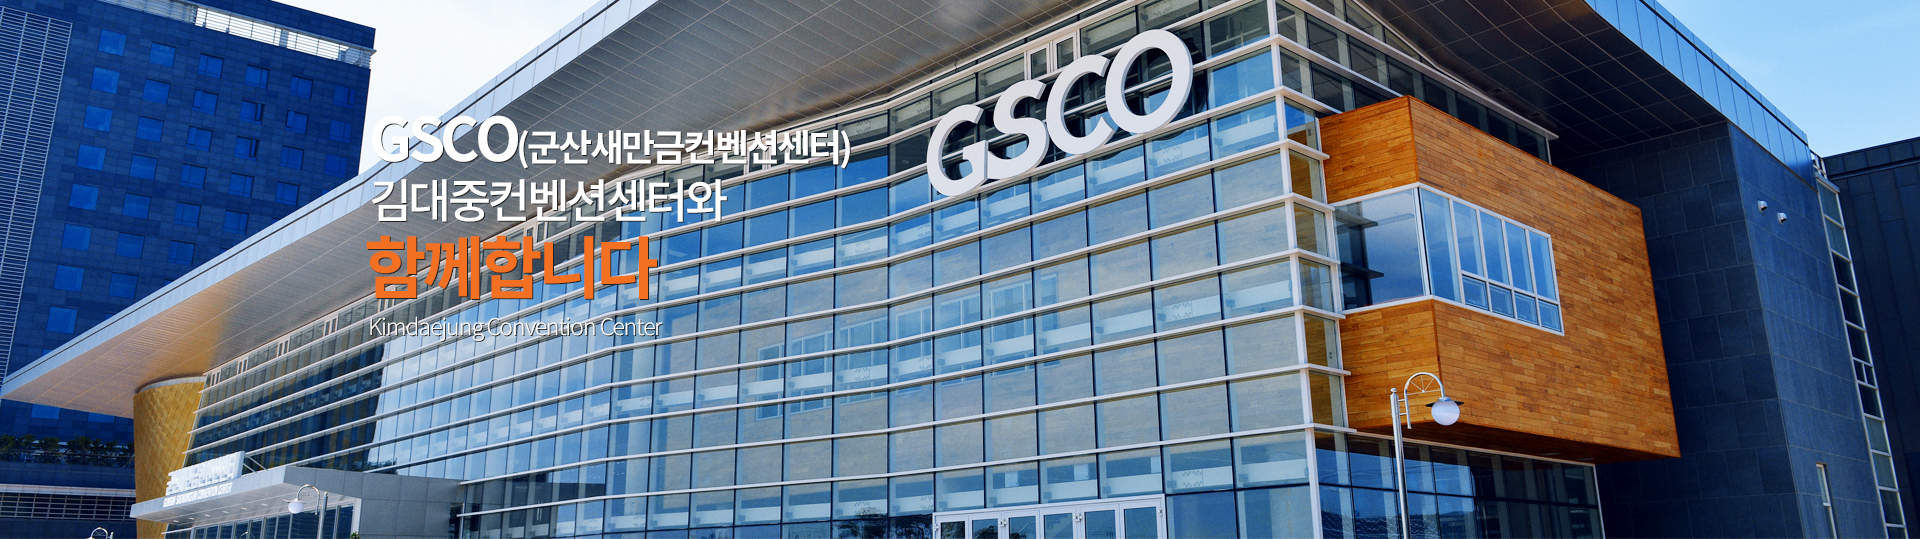 GECO 김대중컨벤션센터와 함께합니다 KimdaejungConvention Center